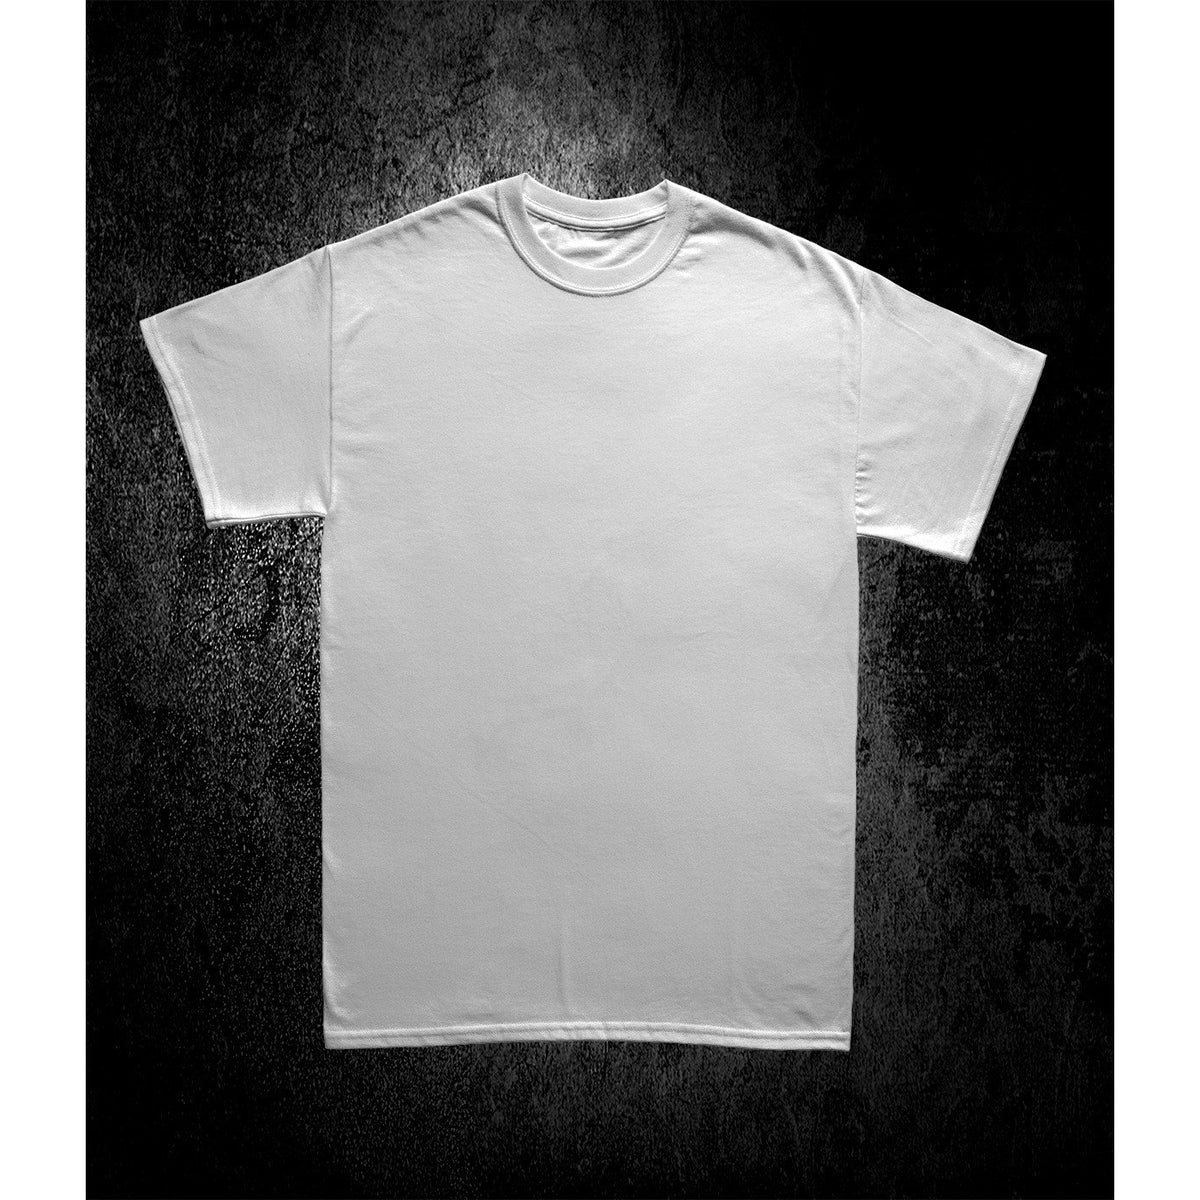 Custom White T-Shirt